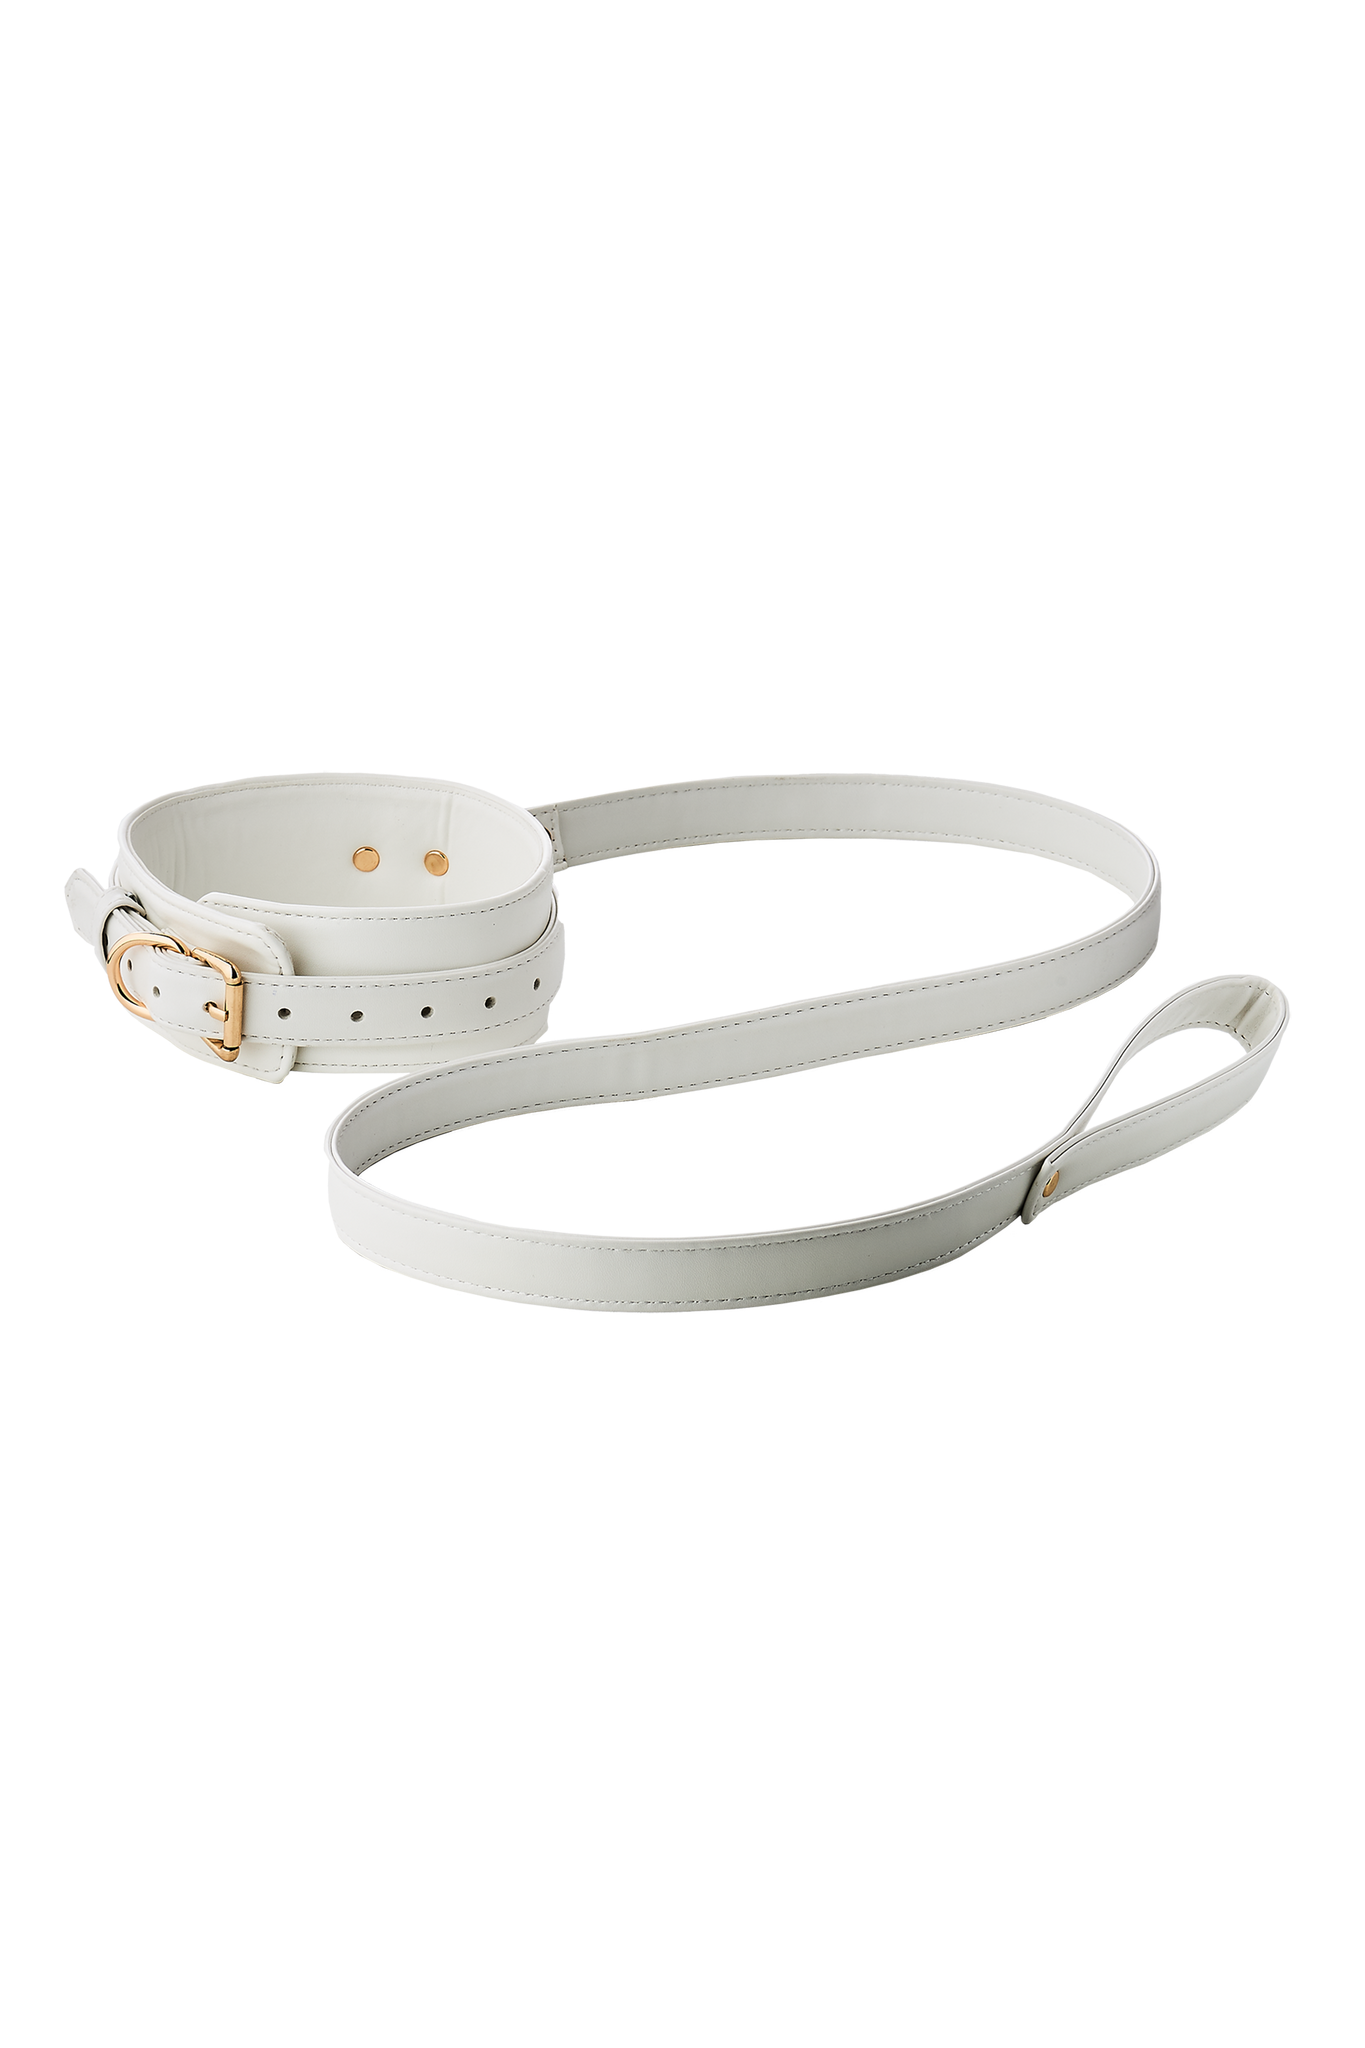 Blaze Elite - Collar & leash, White